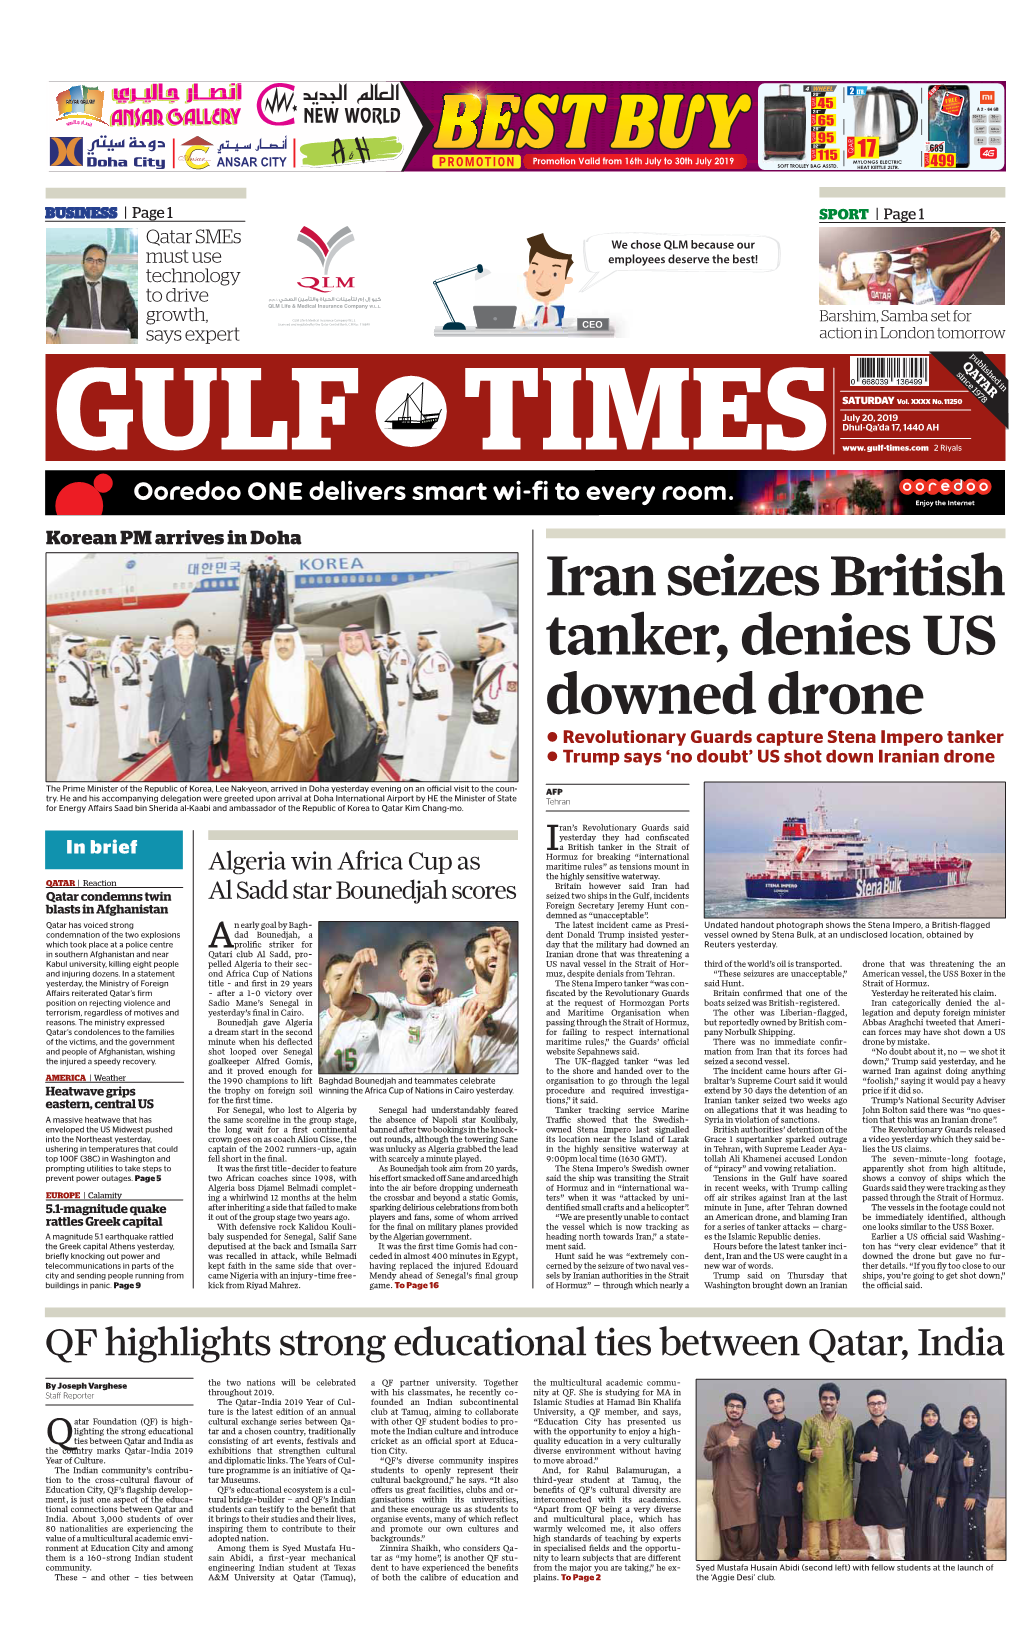 Iran Seizes British Tanker, Denies US Downed Drone Z Revolutionary Guards Capture Stena Impero Tanker Z Trump Says ‘No Doubt’ US Shot Down Iranian Drone